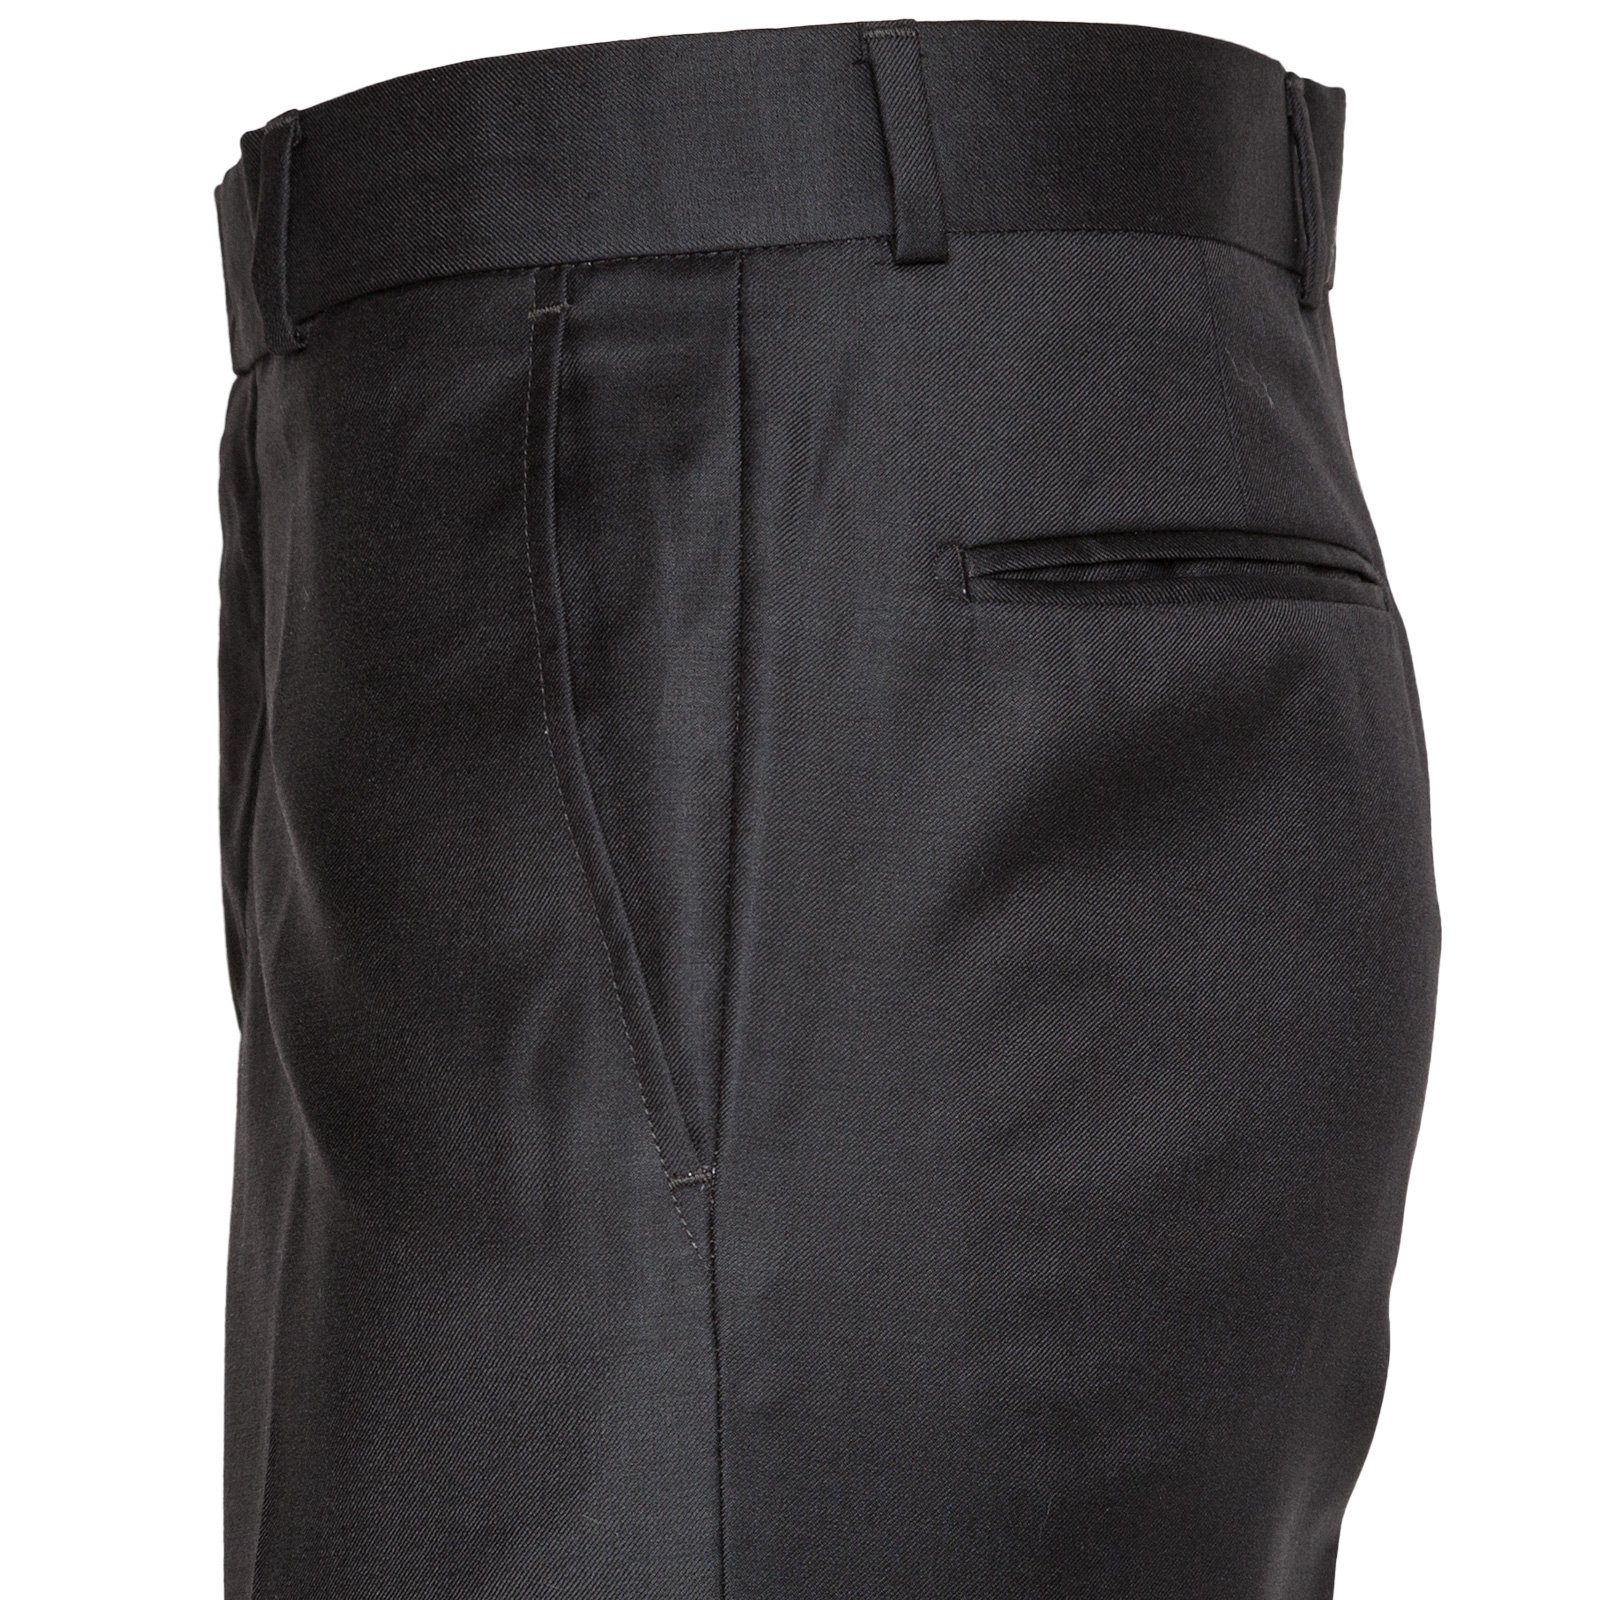 Lotus Black Wool Dress Trouser - CESAR STOCK : Trousers-Dress : Fifth ...